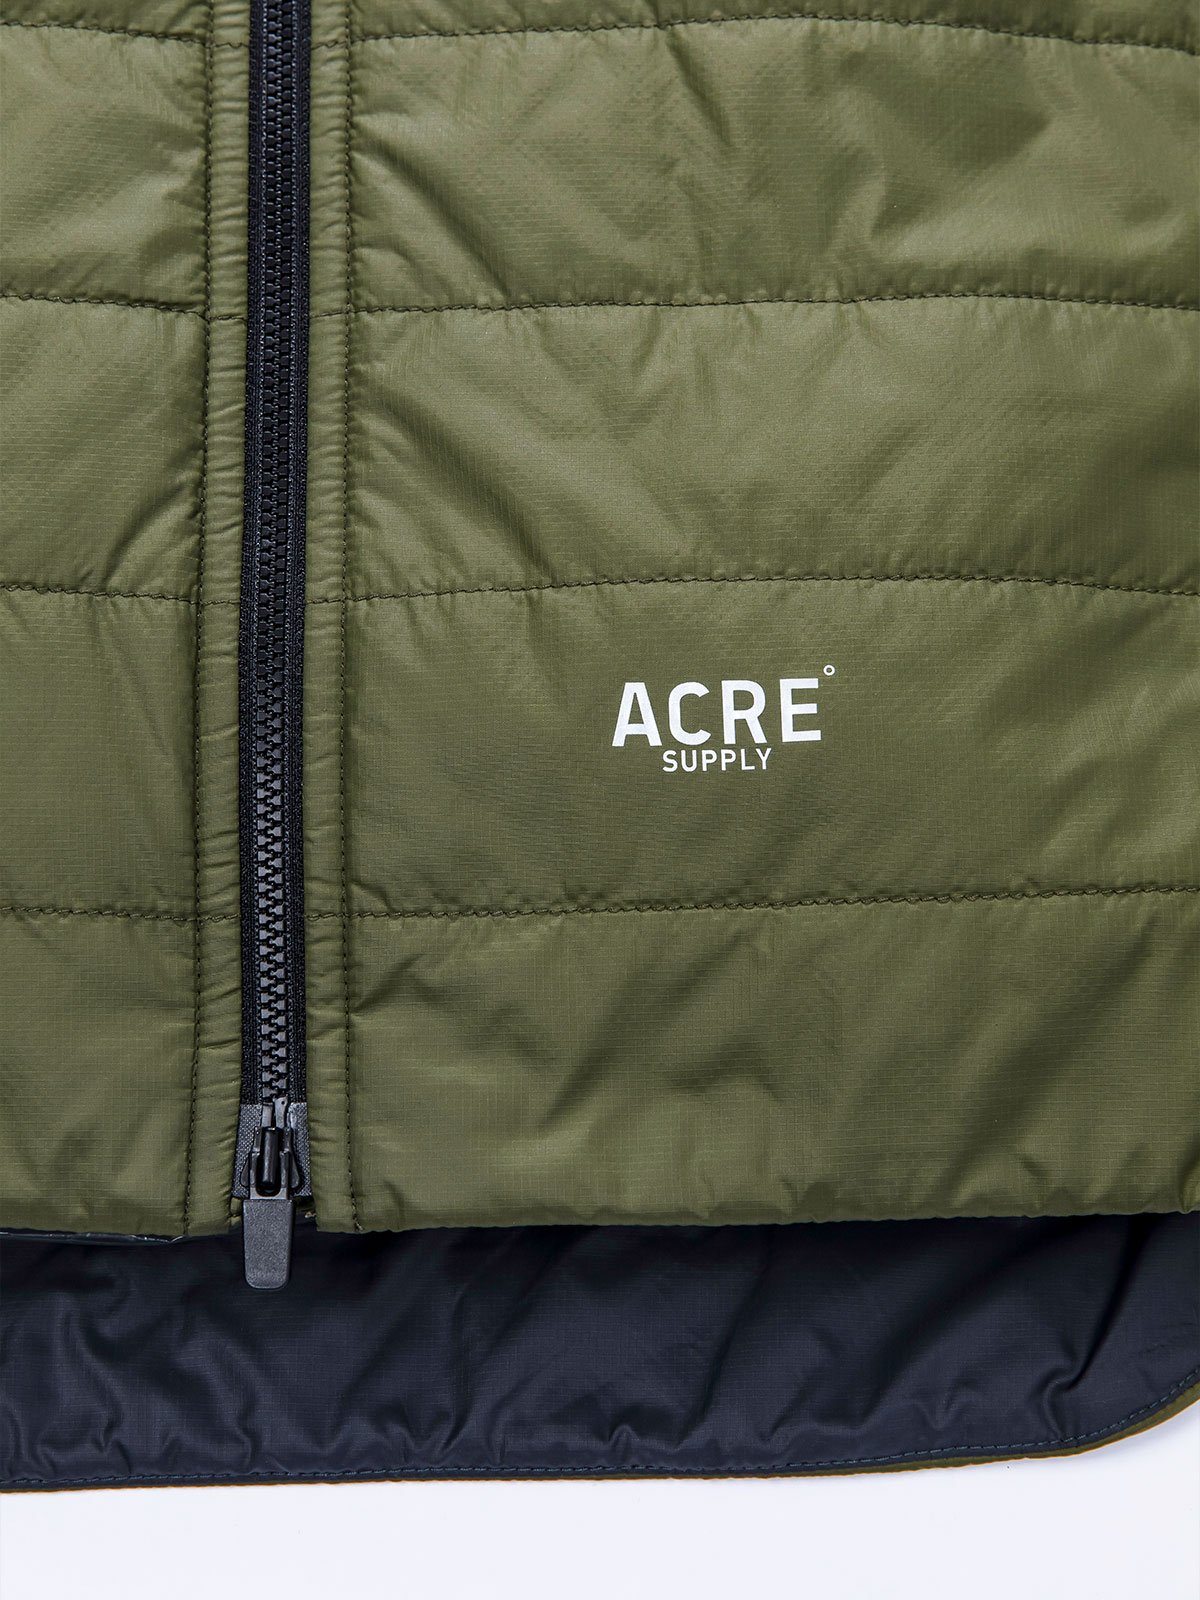 Acre Series Jacket byMission Workshop - 耐候性バッグ＆テクニカルアパレル - サンフランシスコ＆ロサンゼルス - 耐久性に優れた作り - 永久保証